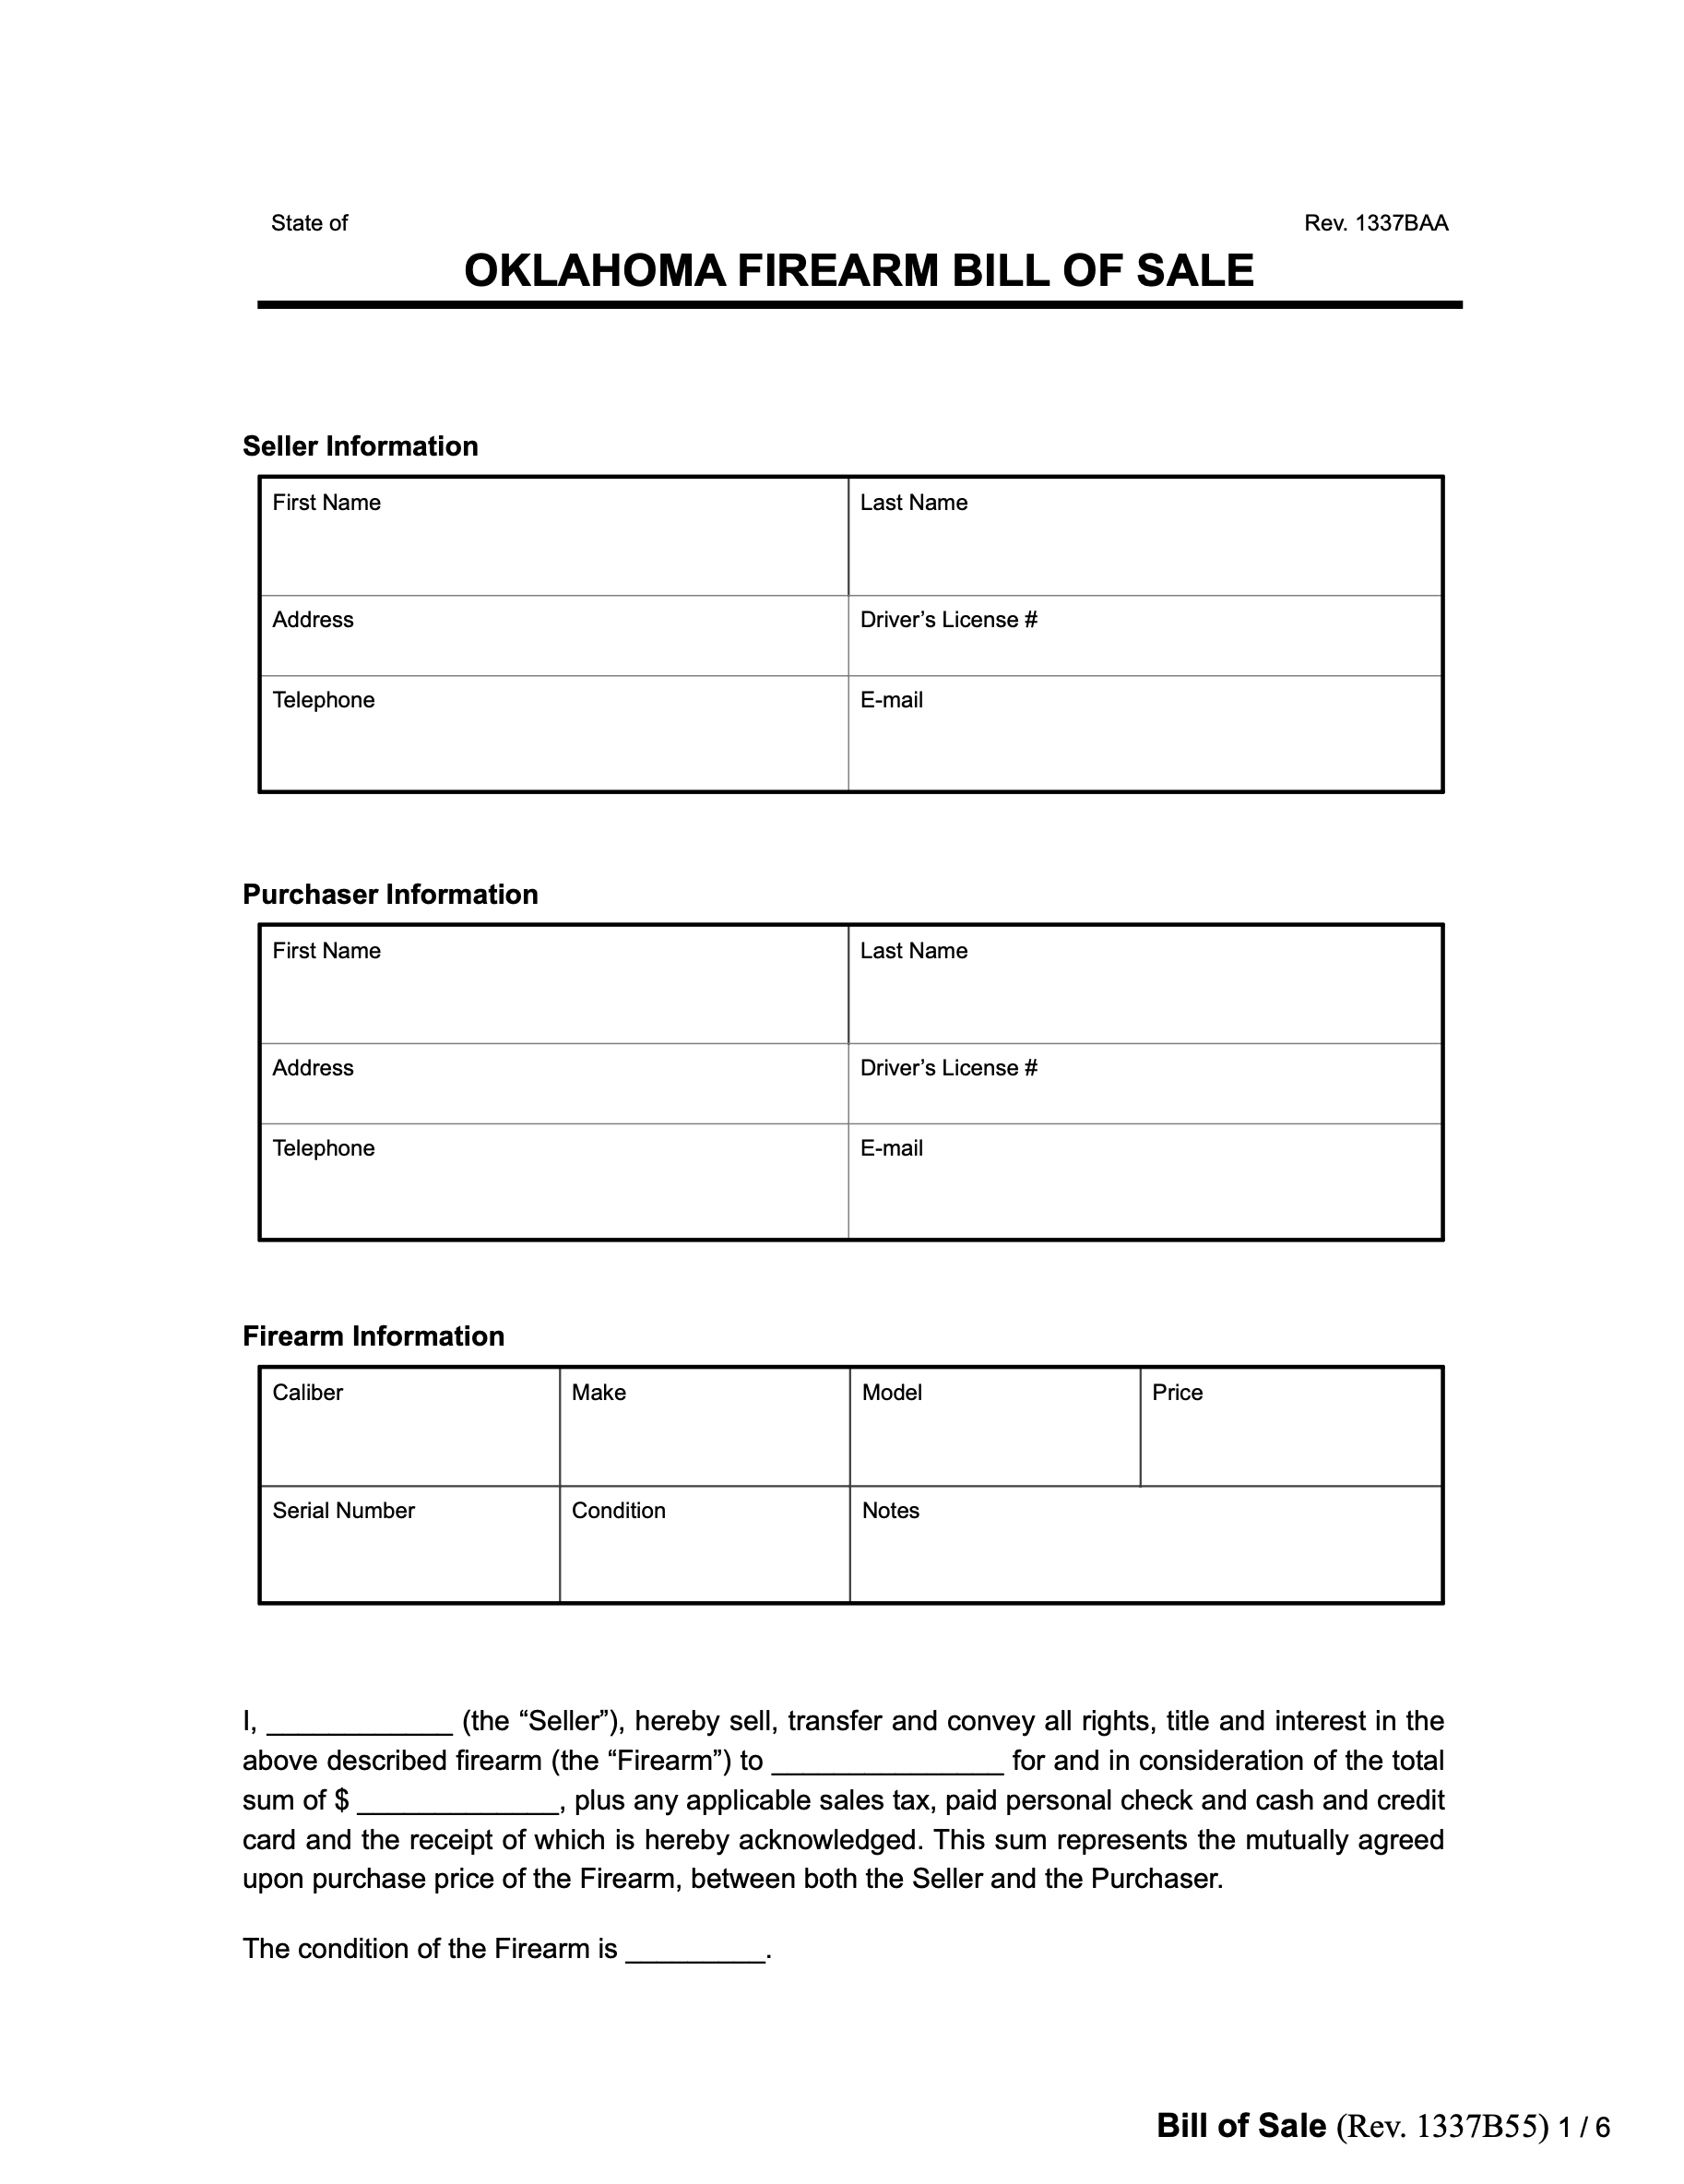 oklahoma firearm bill of sale form